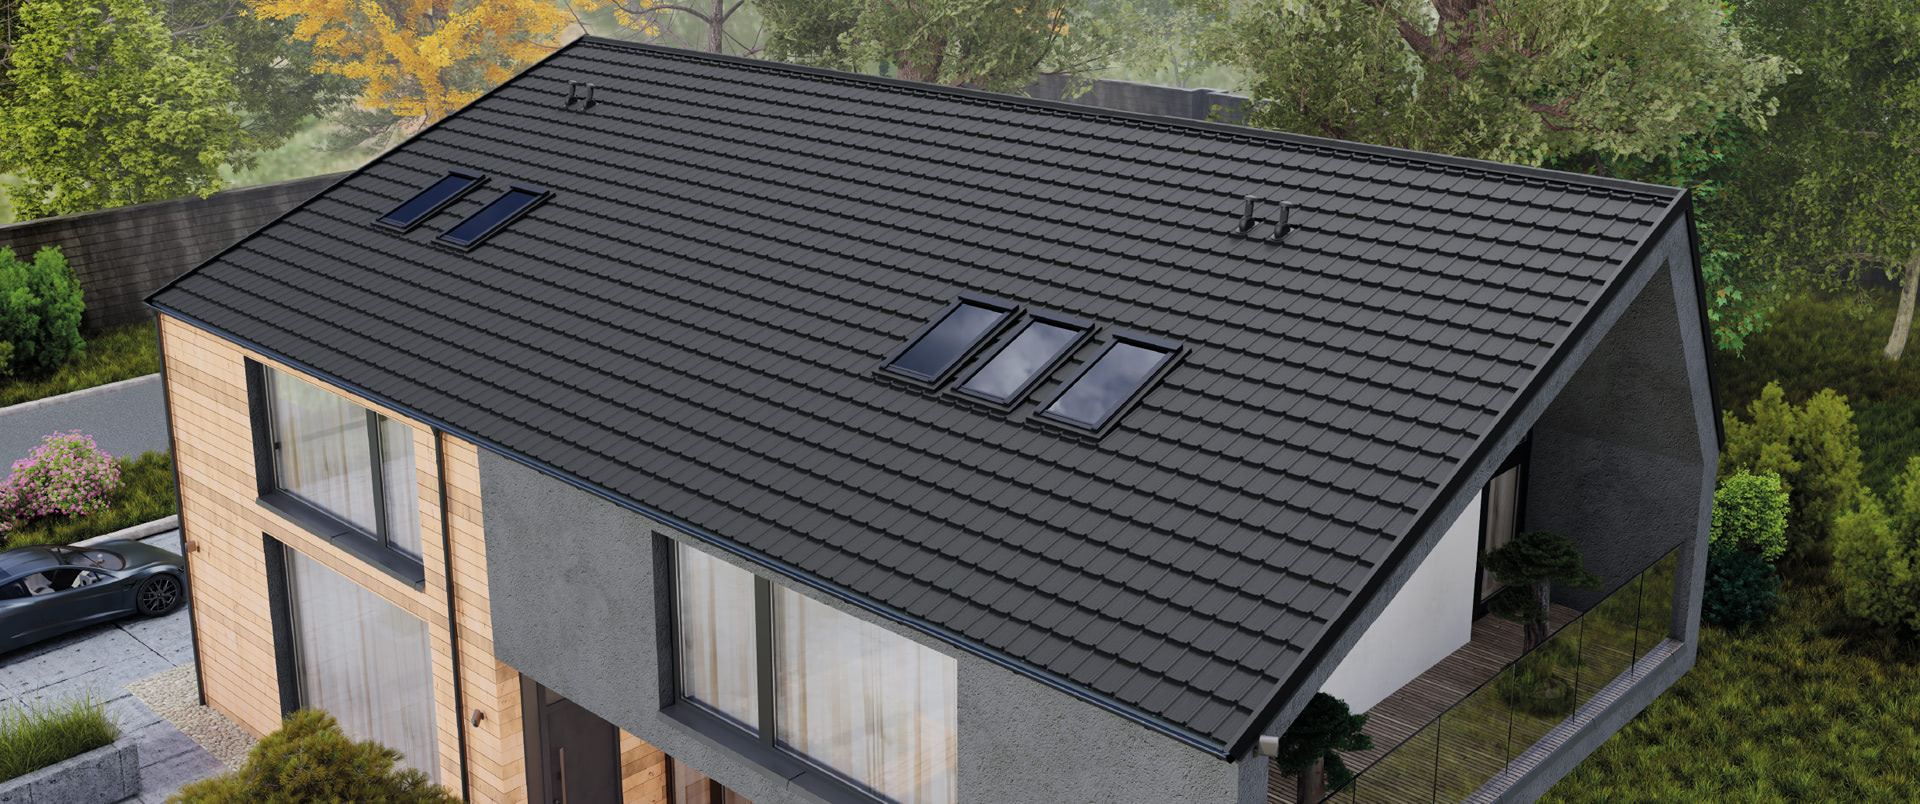 Classic FINN metal roofing tiles